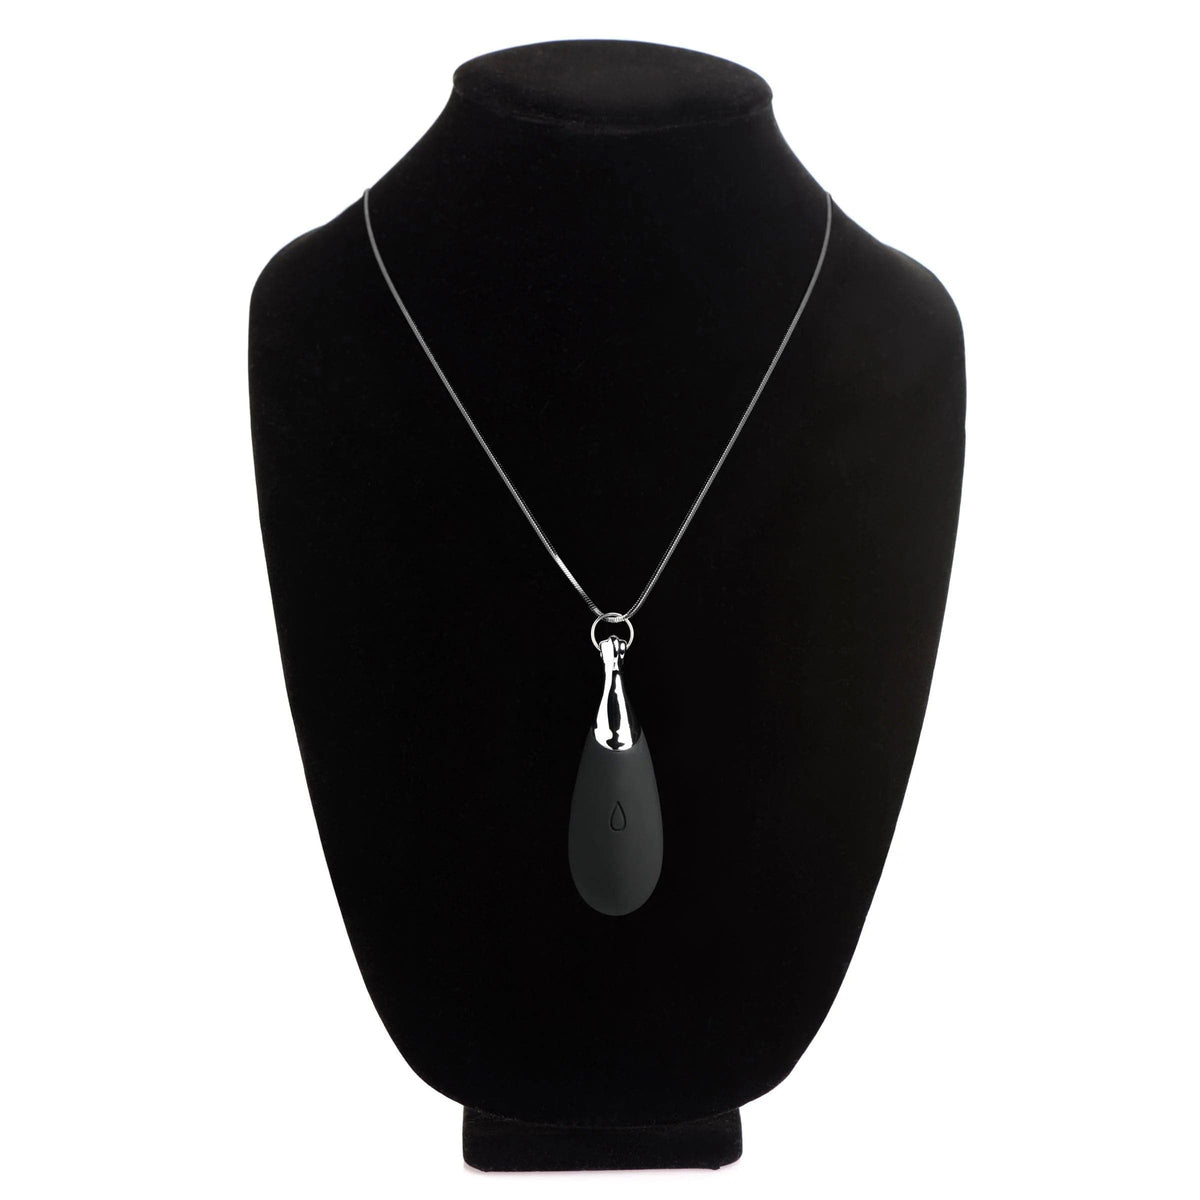 10x vibrating silicone teardrop necklace black